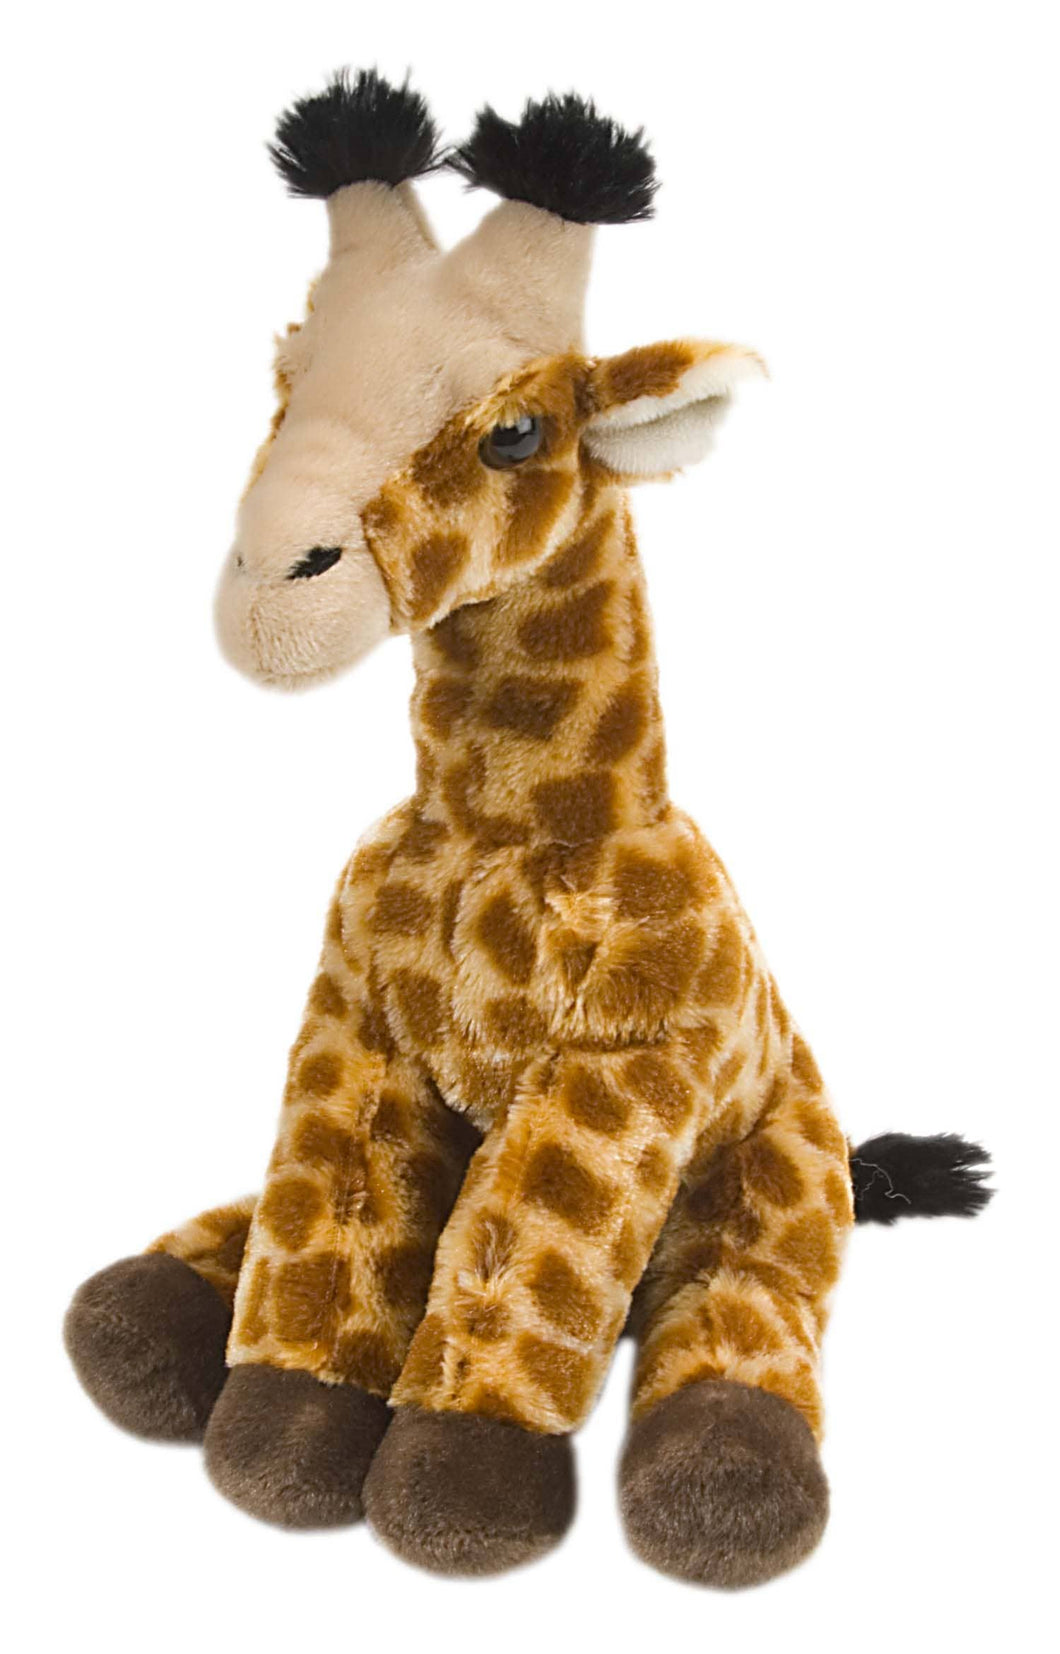 Baby Giraffe Stuffed Animal - 12